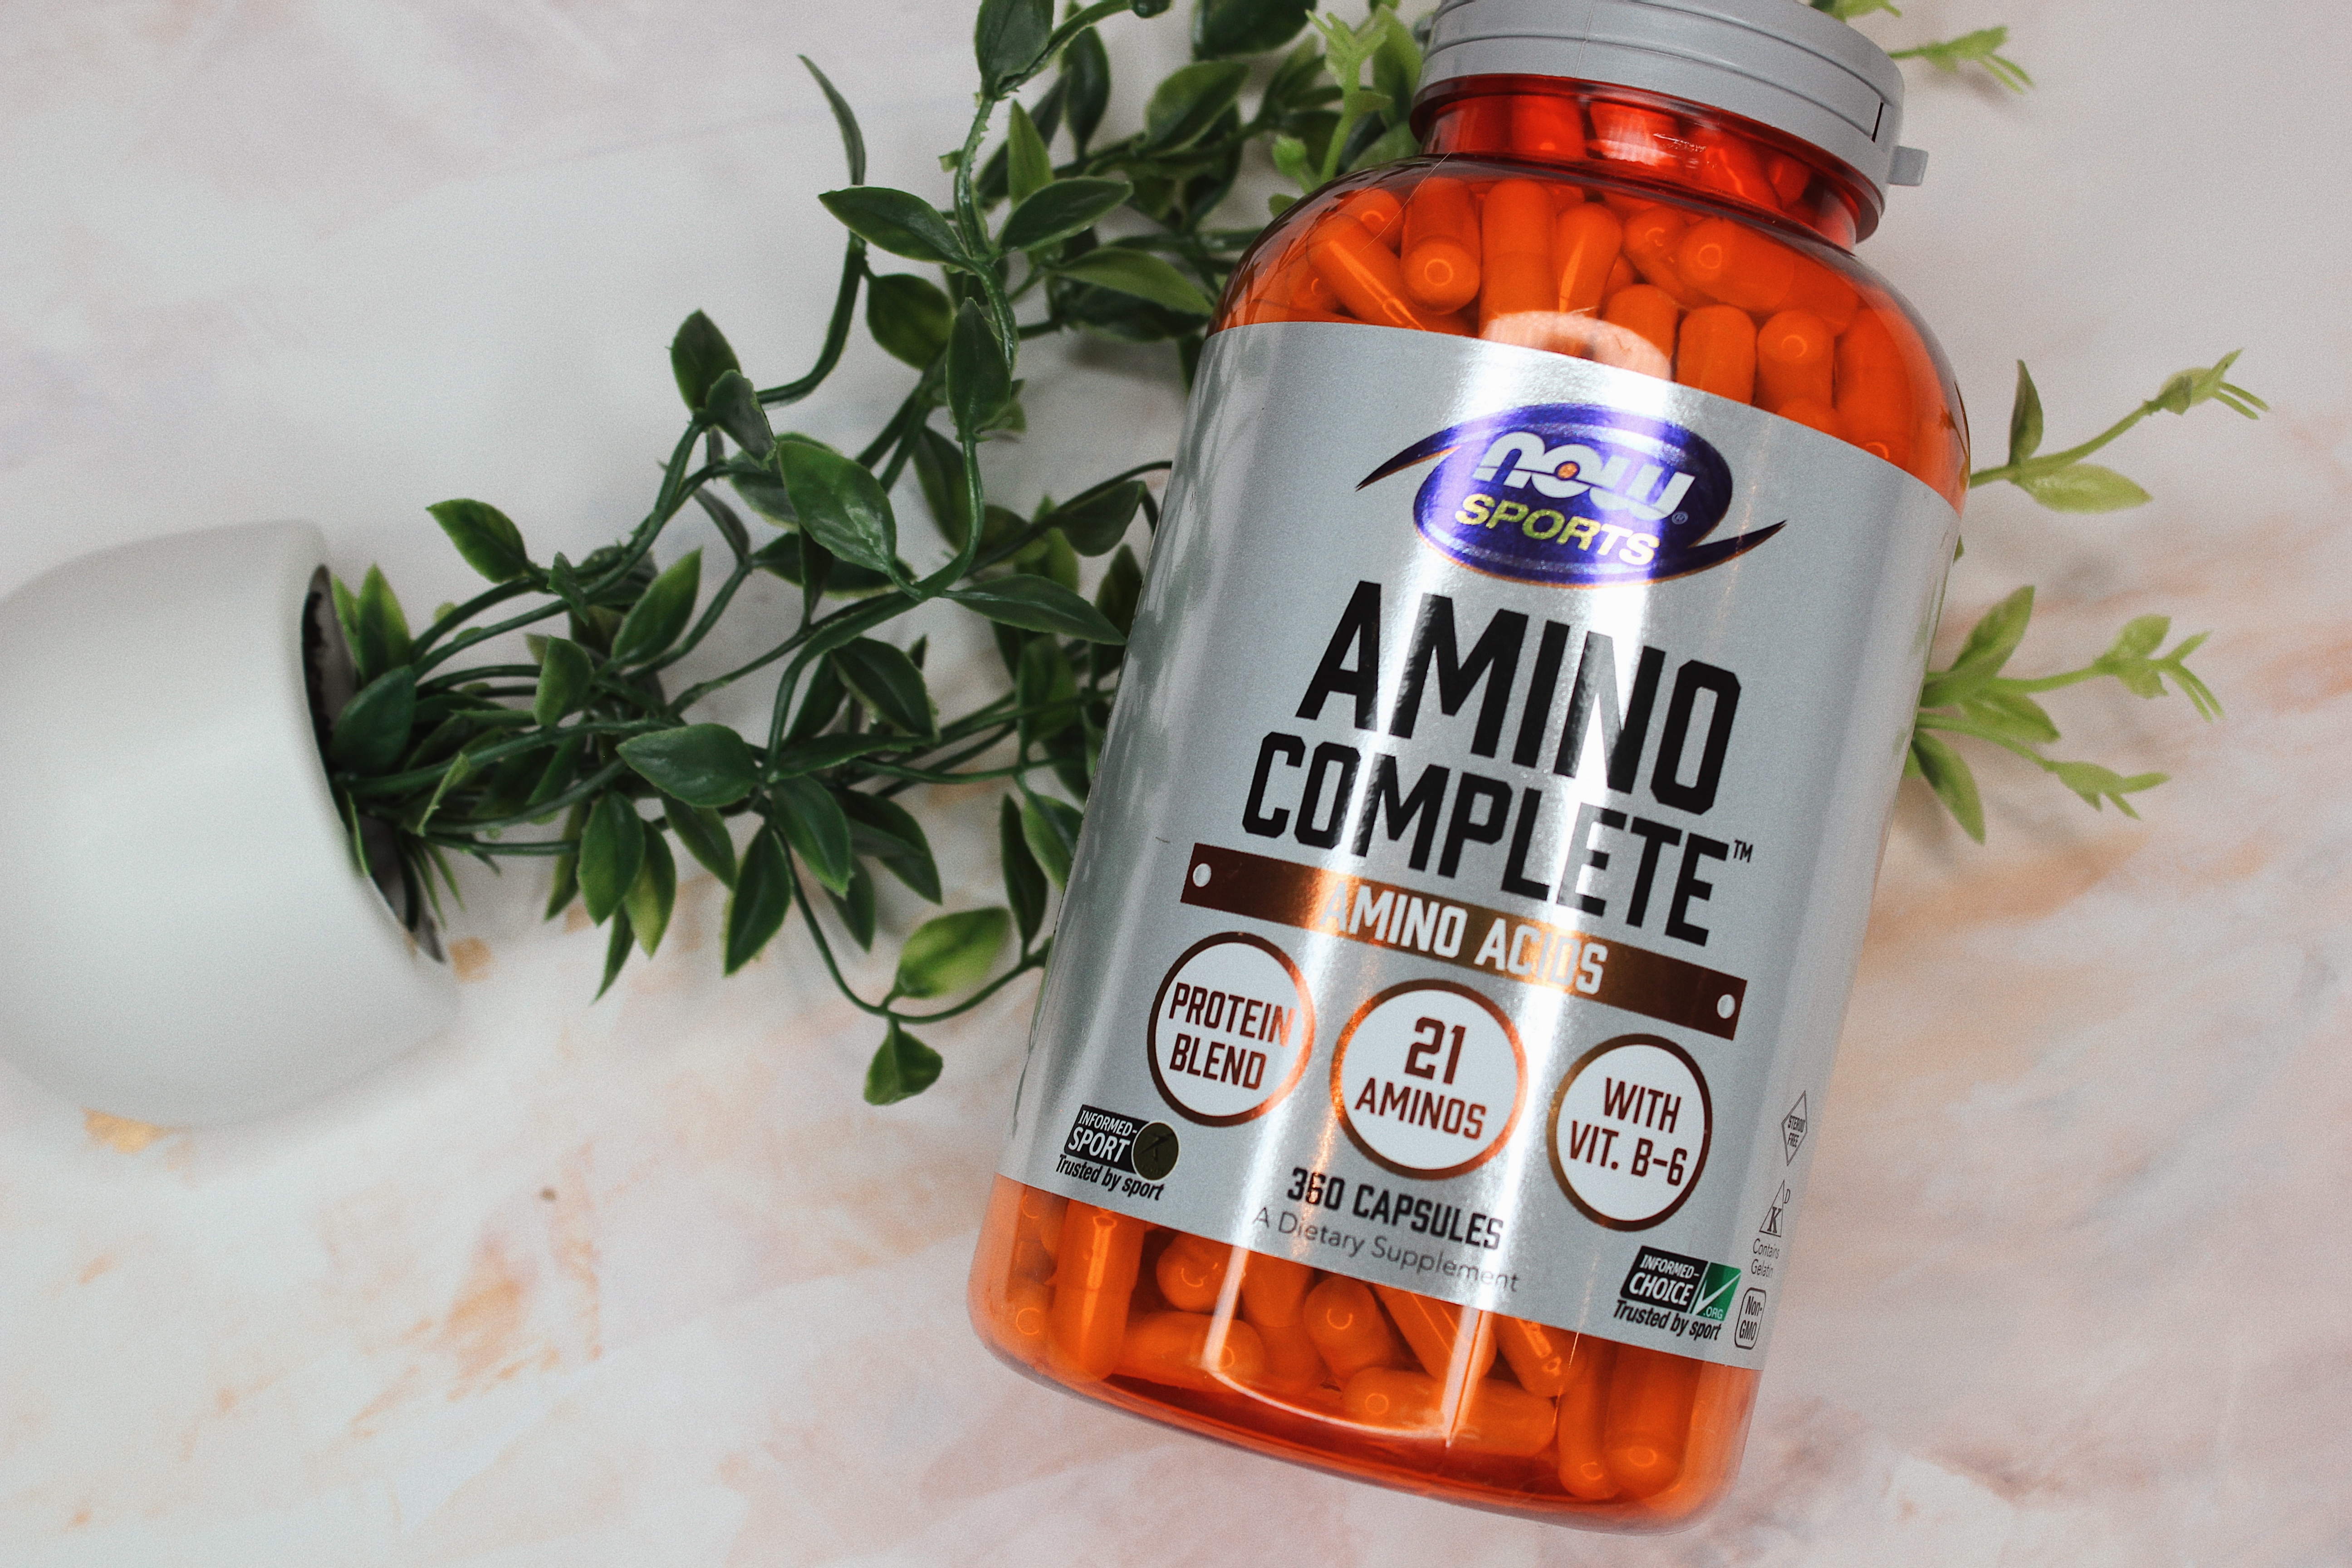 Amino Complete, Аминокомплекс – источник аминокислот 